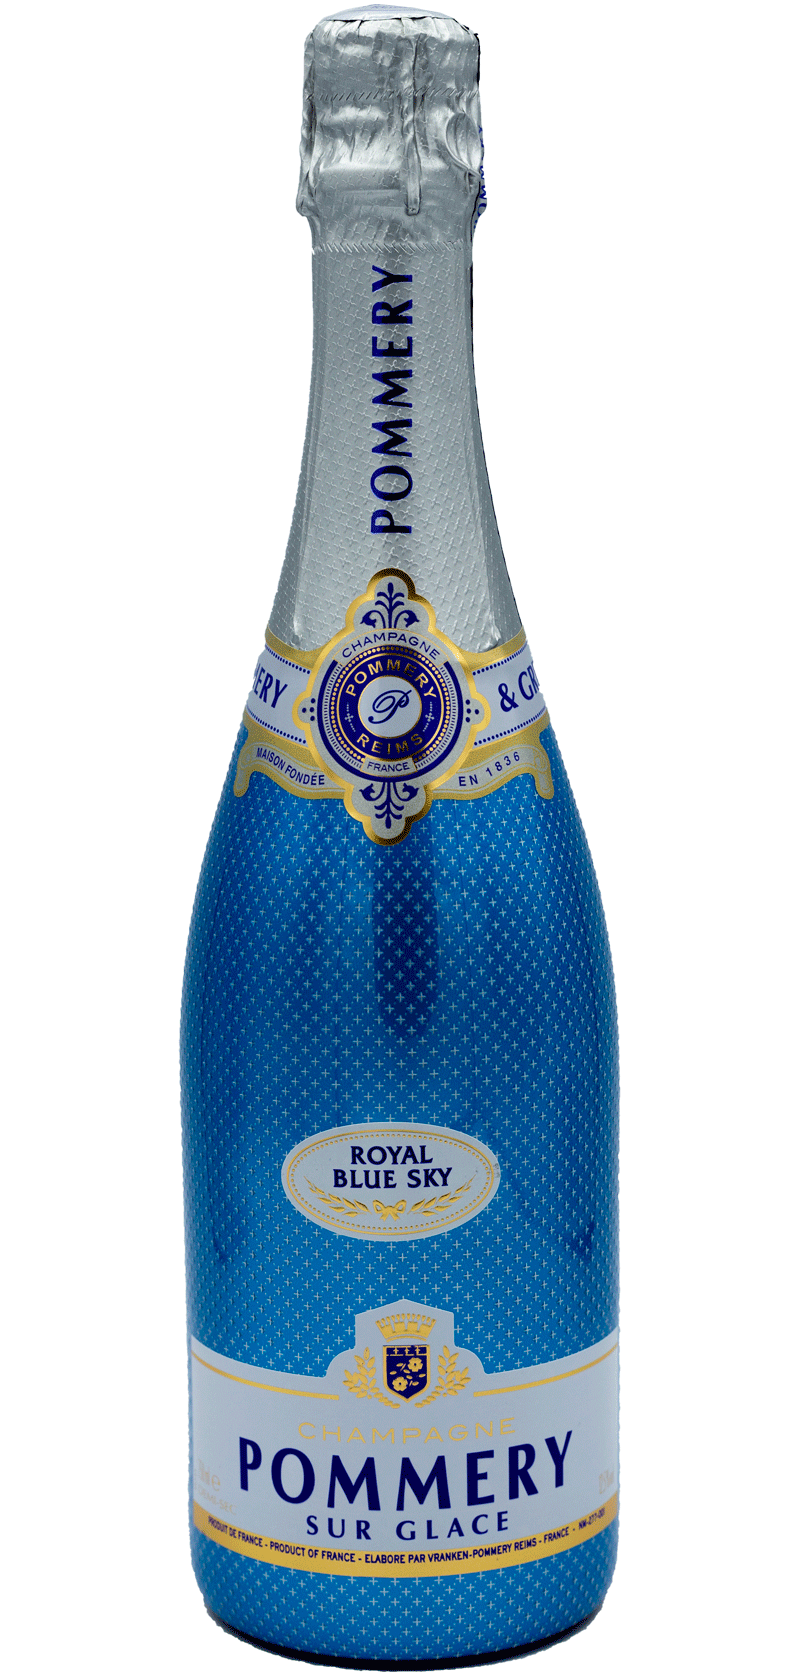 Pommery - Royal Blue Sky sur Glace - Champagne